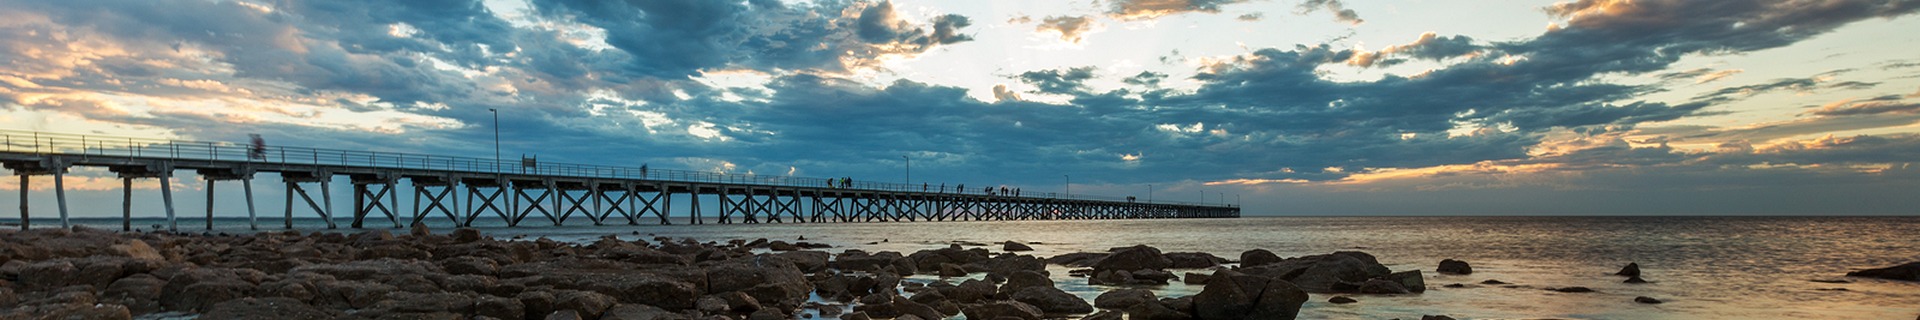 Sunset at the Port Hughes Jetty on Yorke Peninsula in South Australia Australia on 22nd February 2018